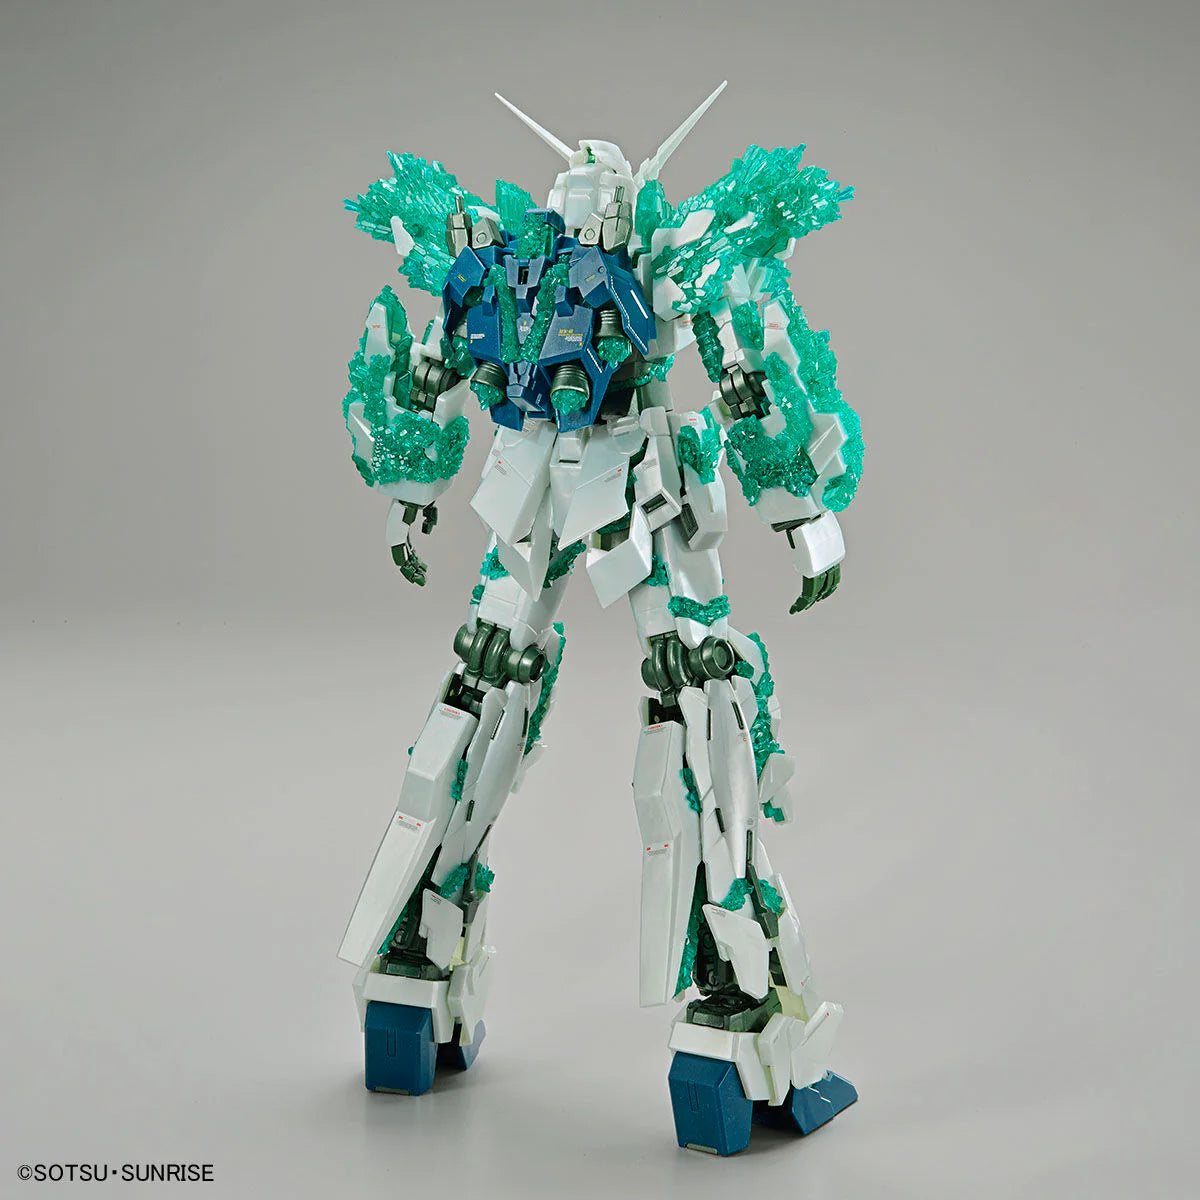 MG Gundam Base Limited Unicorn Gundam(Luminous Crystal Body) - Gundam Extra-Your BEST Gunpla Supplier